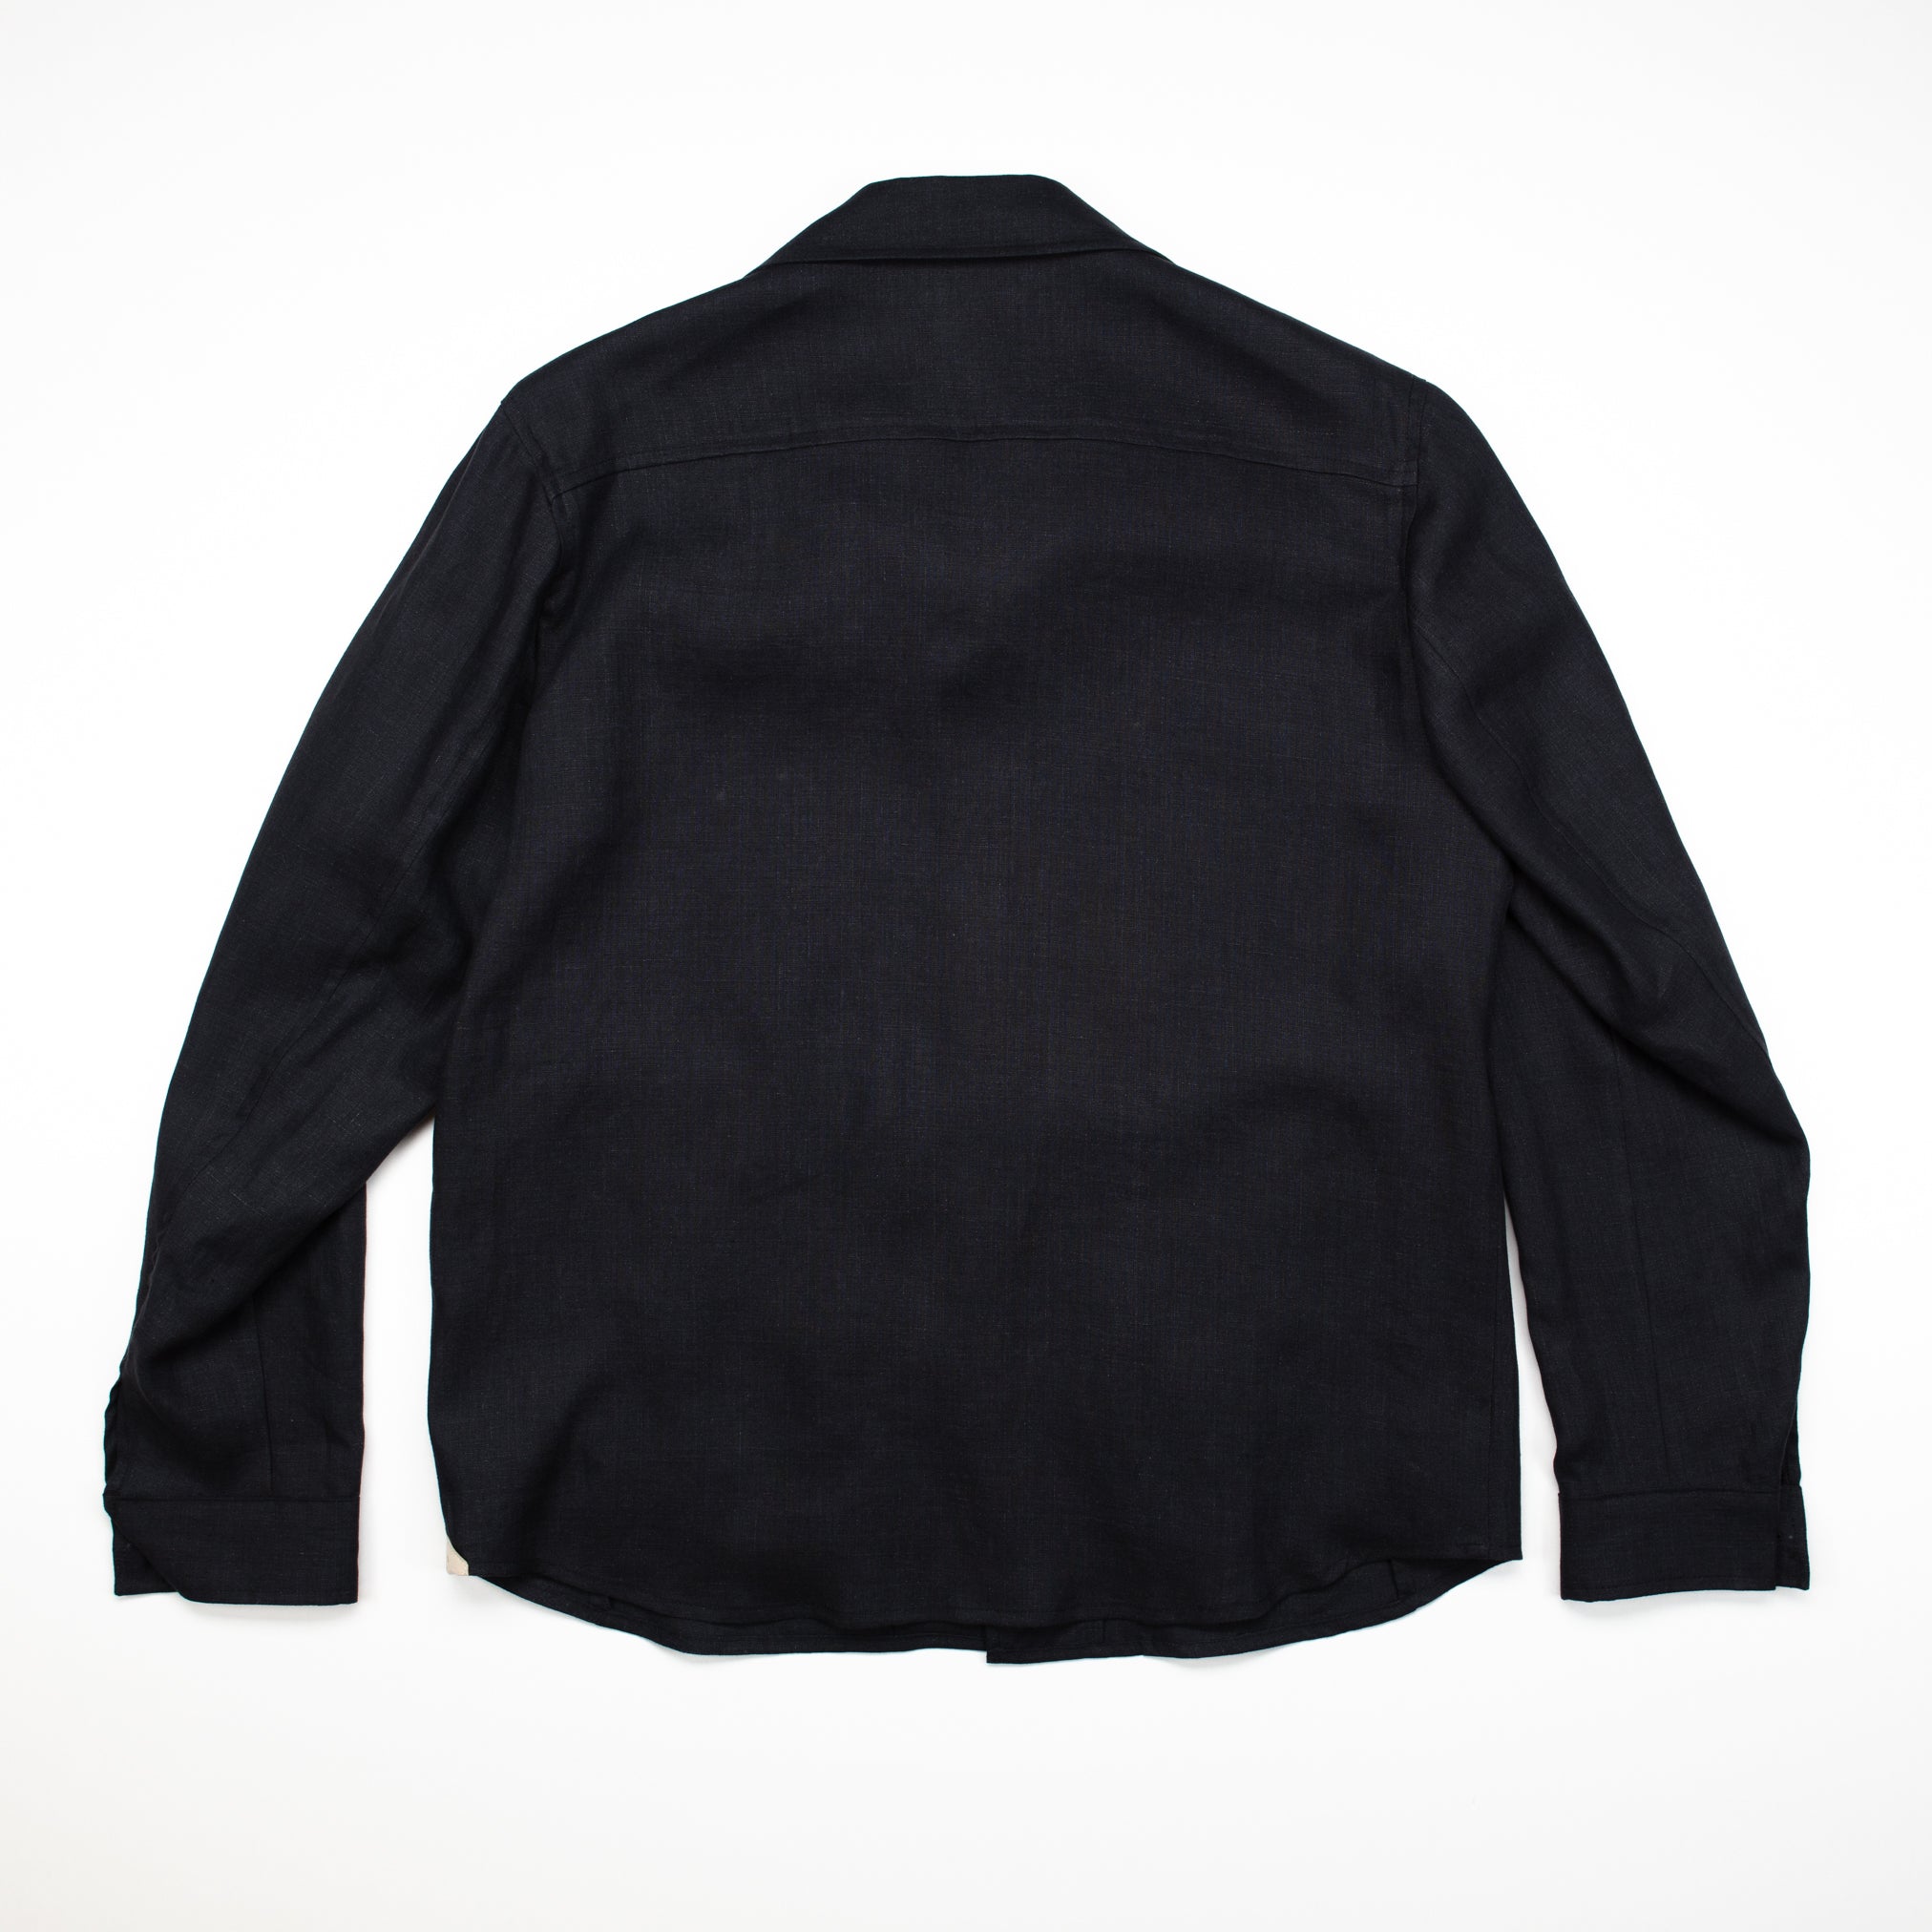 John Shirt Jacket in Black Linen